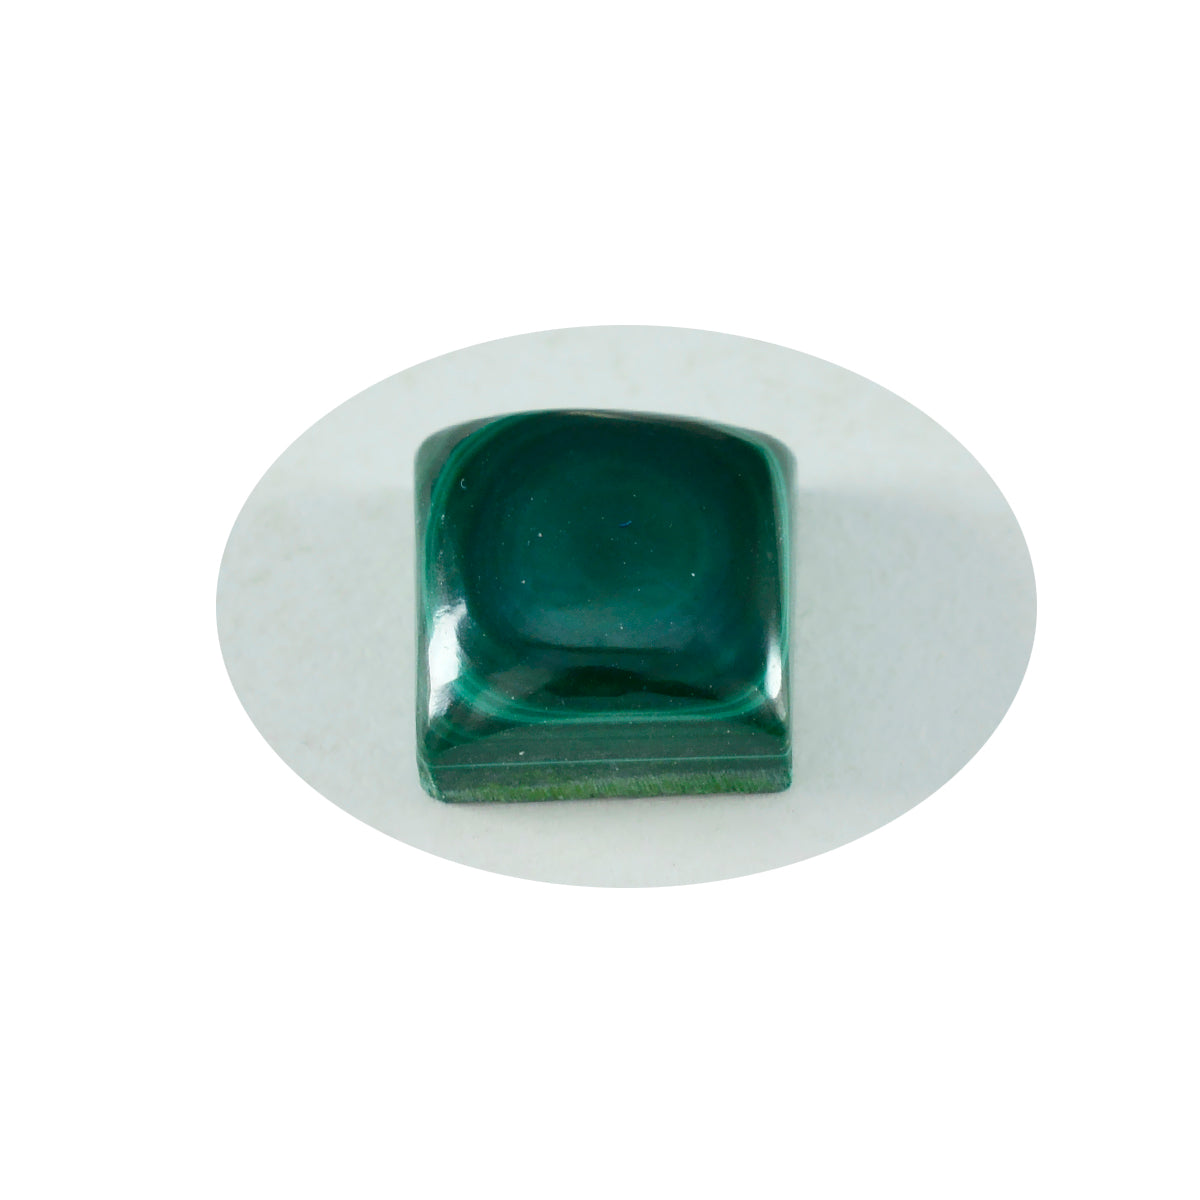 riyogems 1 st grön malakit cabochon 13x13 mm kvadratisk form a+1 kvalitets lös ädelsten